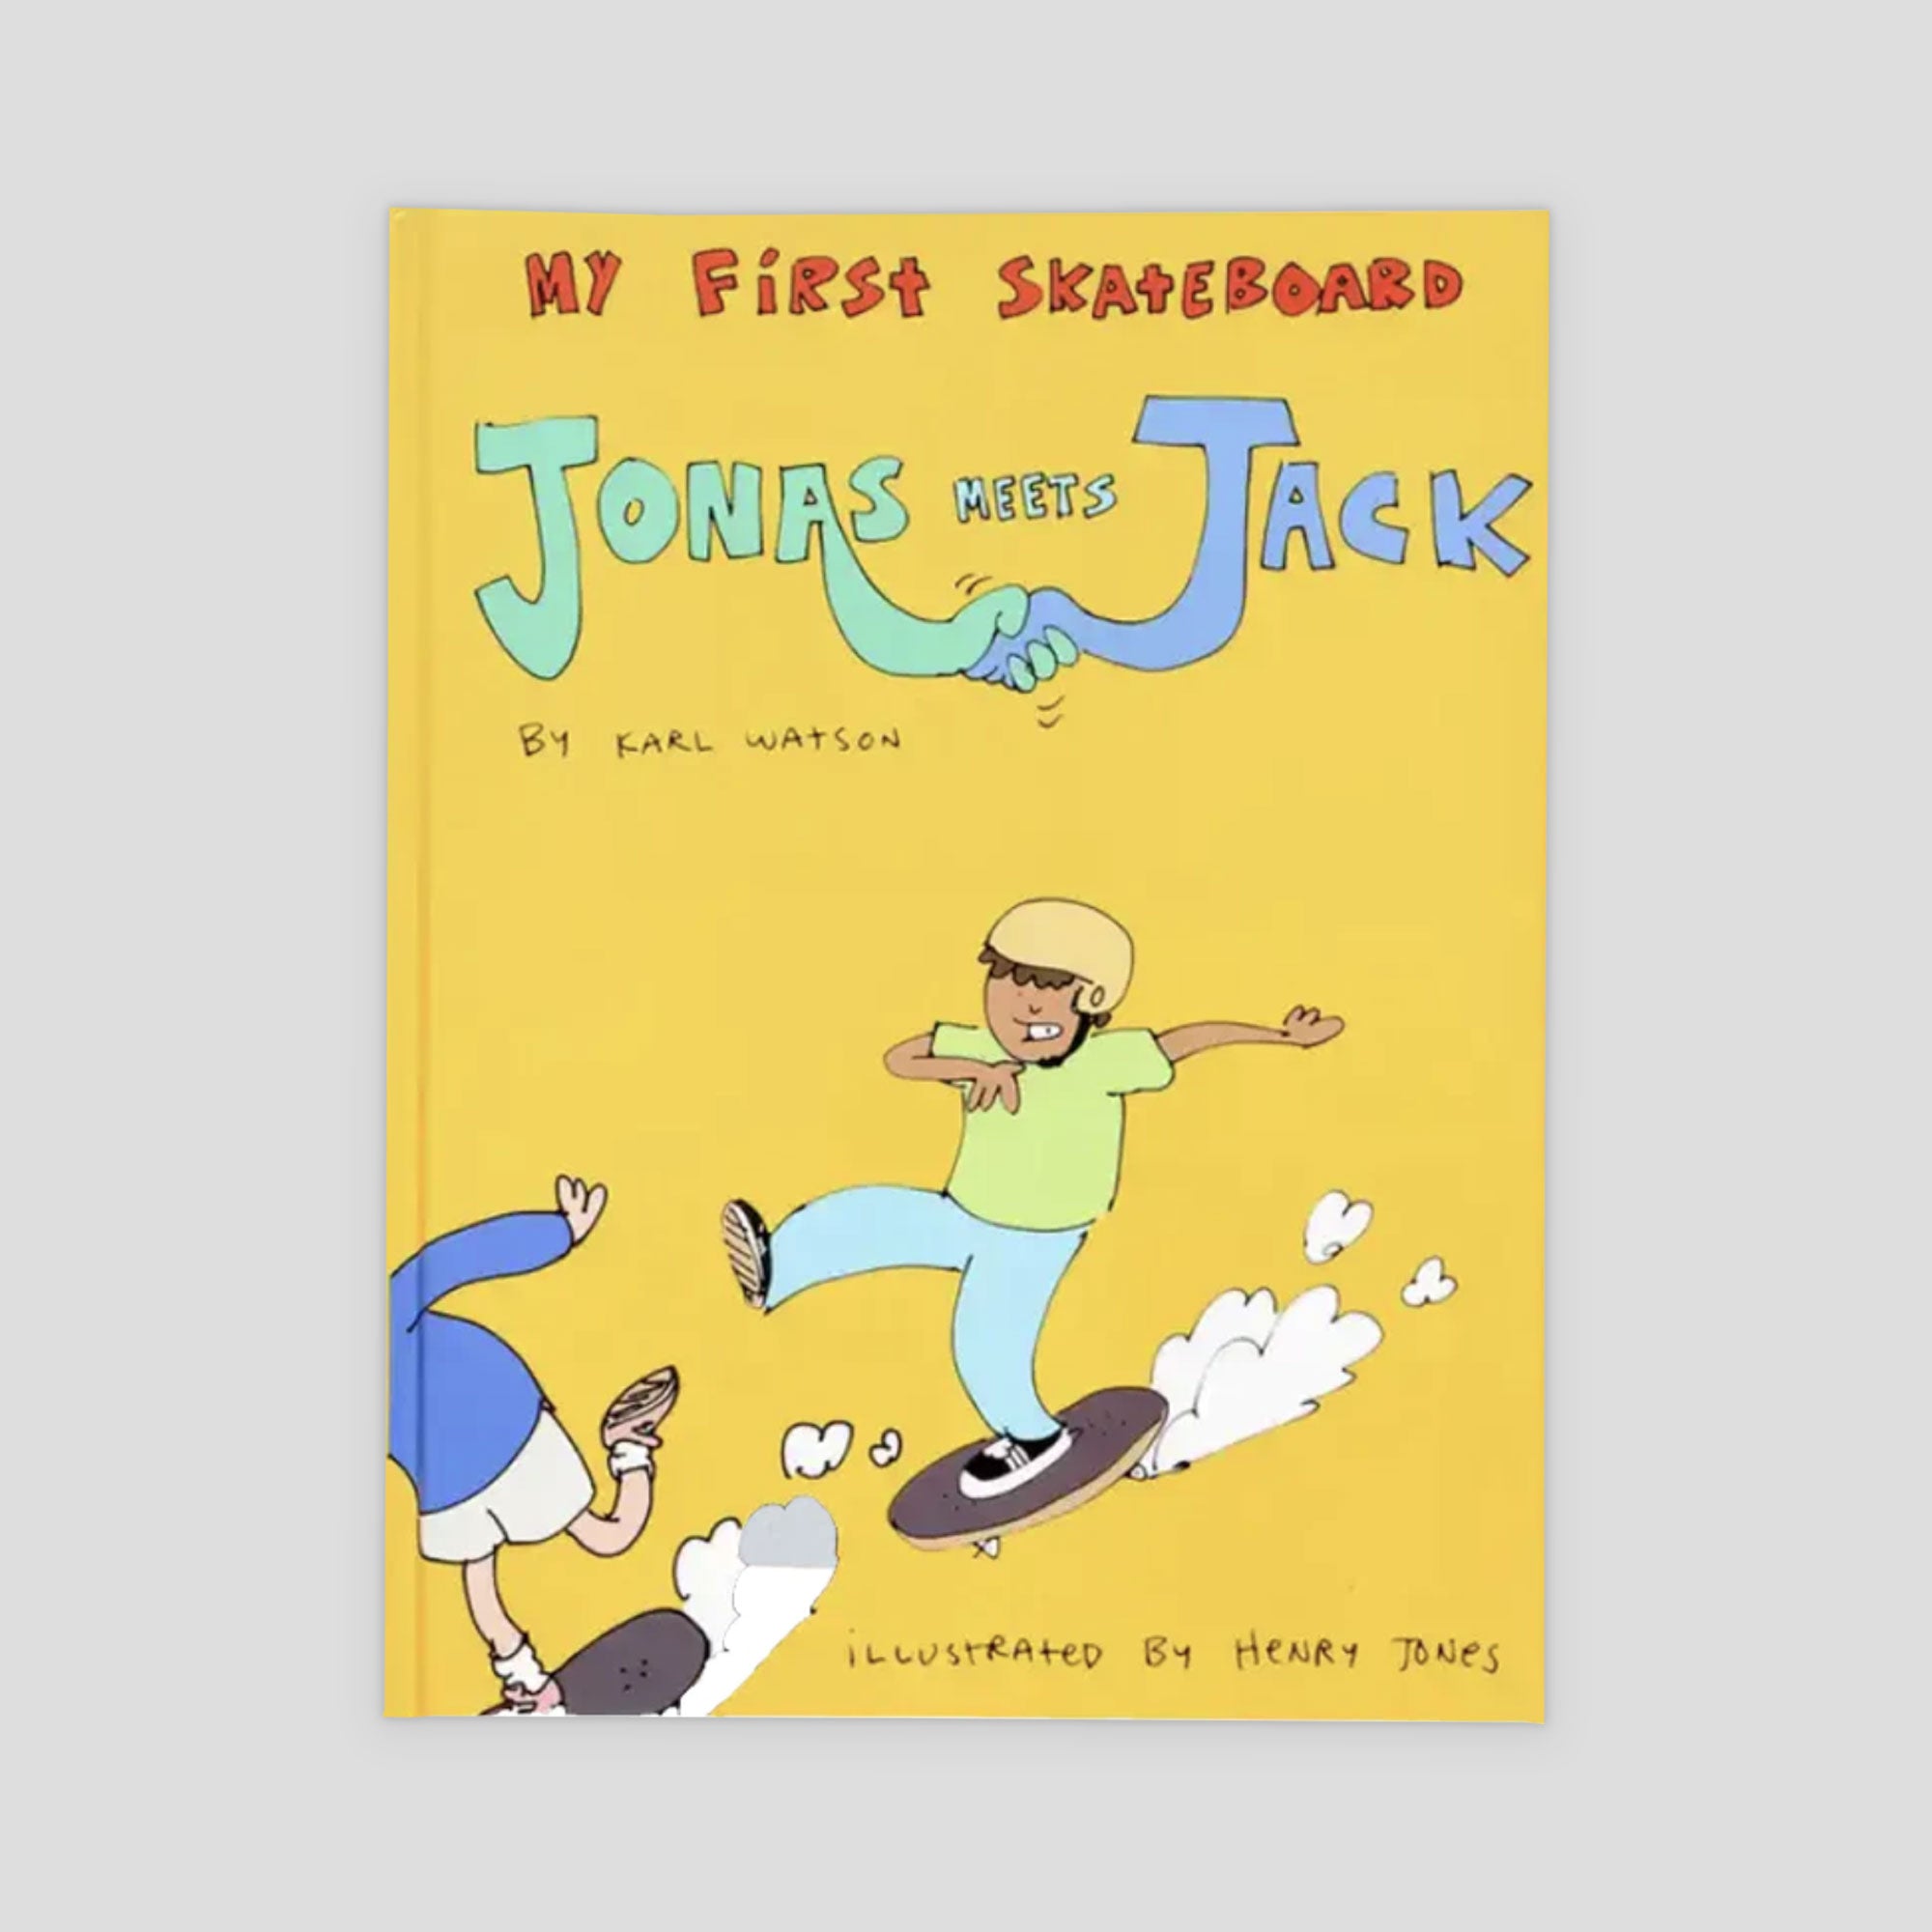 My First Skateboard Jonas Meets Jack by Karl Watson